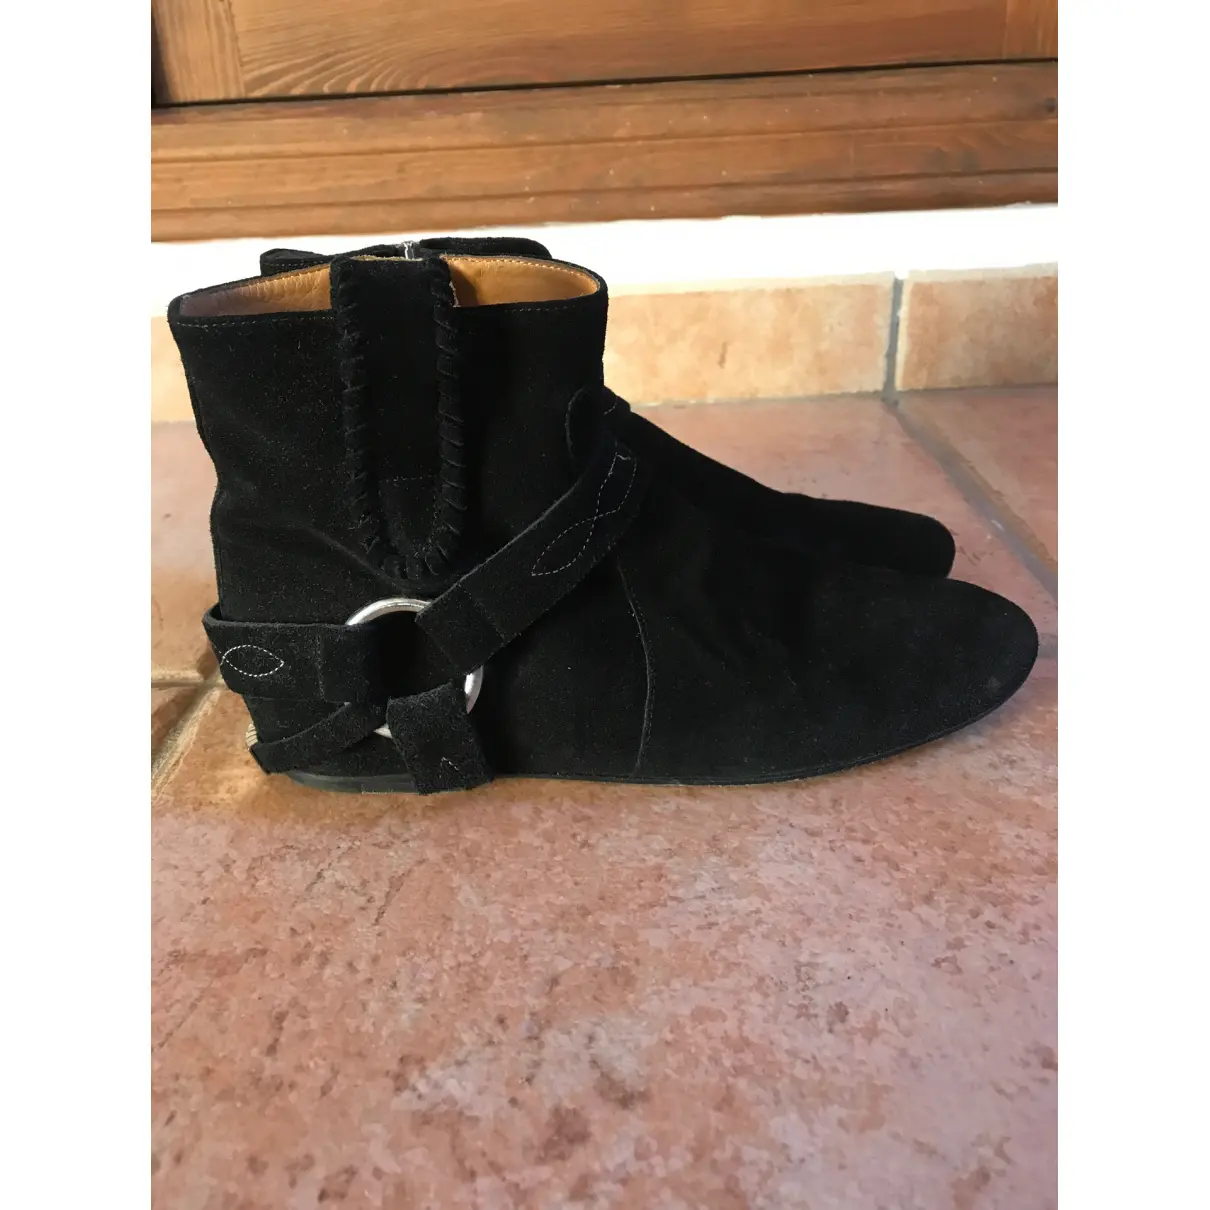 Gaucho ankle boots Isabel Marant Etoile